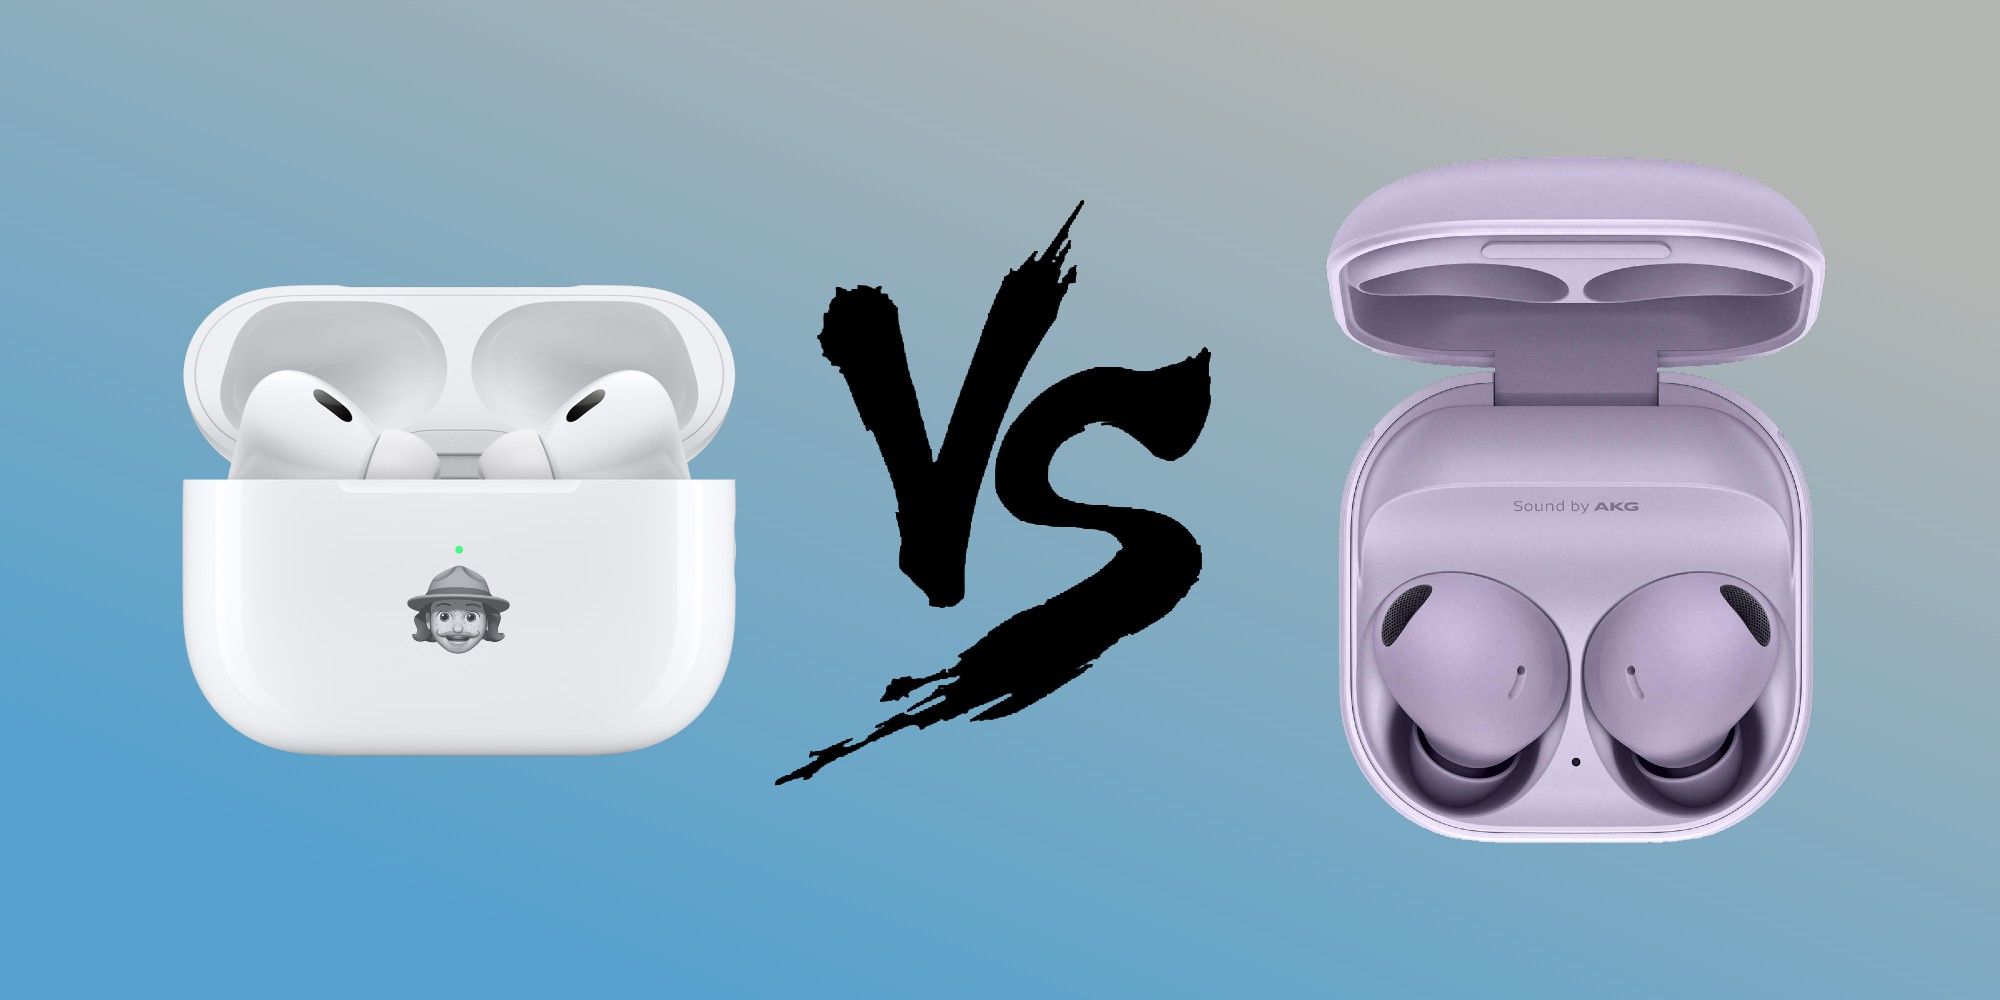 Apple AirPods Pro 2 vs. Samsung Galaxy Buds 2 Pro